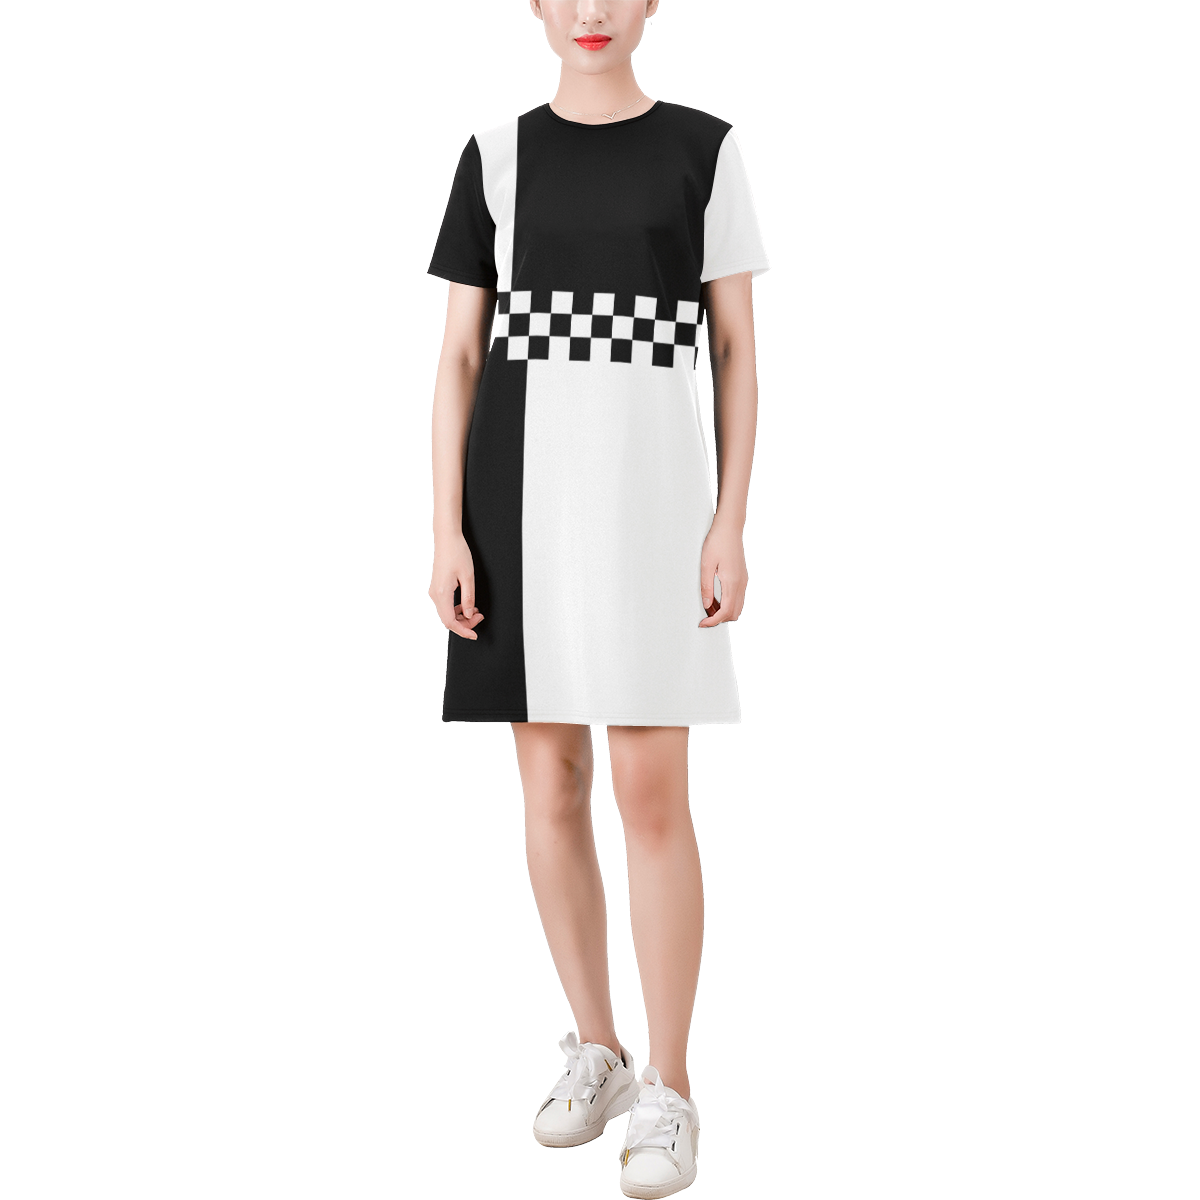 Mod Ska Punk Black and White by ArtformDesigns Short-Sleeve Round Neck A-Line Dress (Model D47)